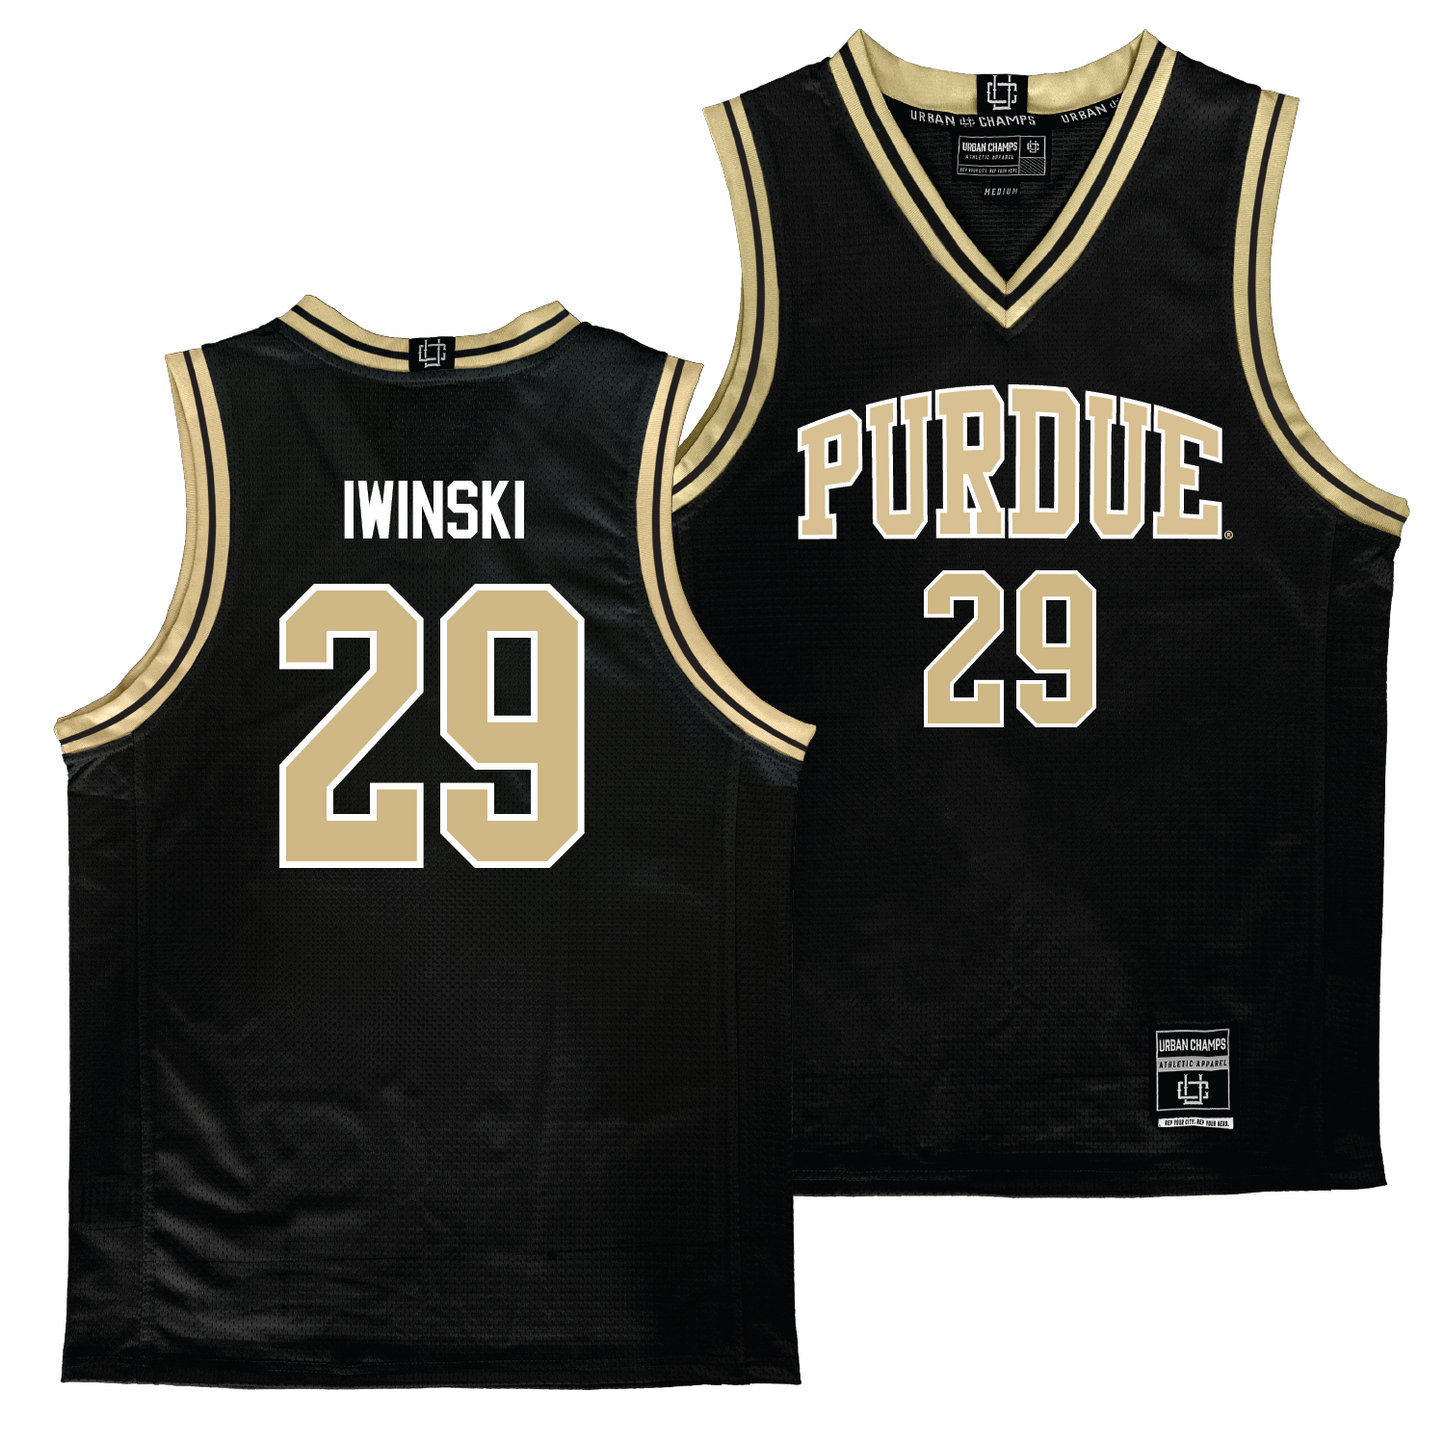 Purdue Men's Black Basketball Jersey - Kyle Iwinski | #29